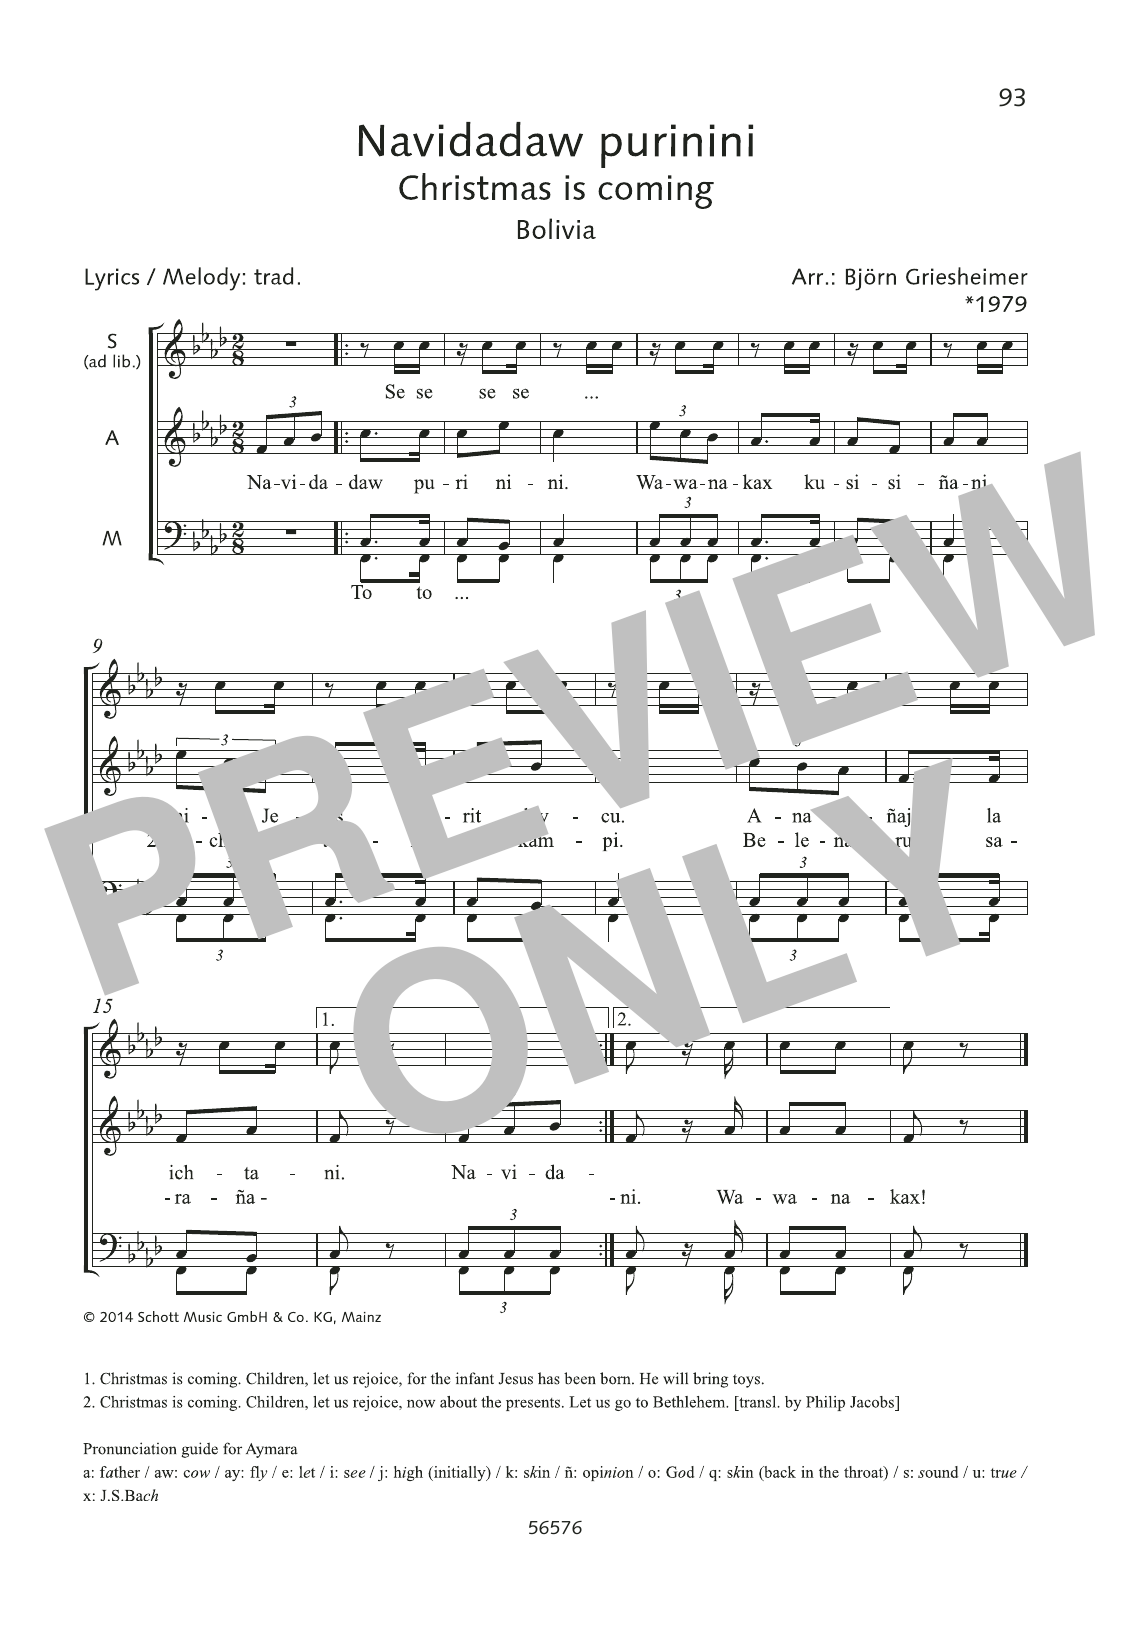 Björn Griesheimer Navidadaw purinini Sheet Music Notes & Chords for Choral - Download or Print PDF